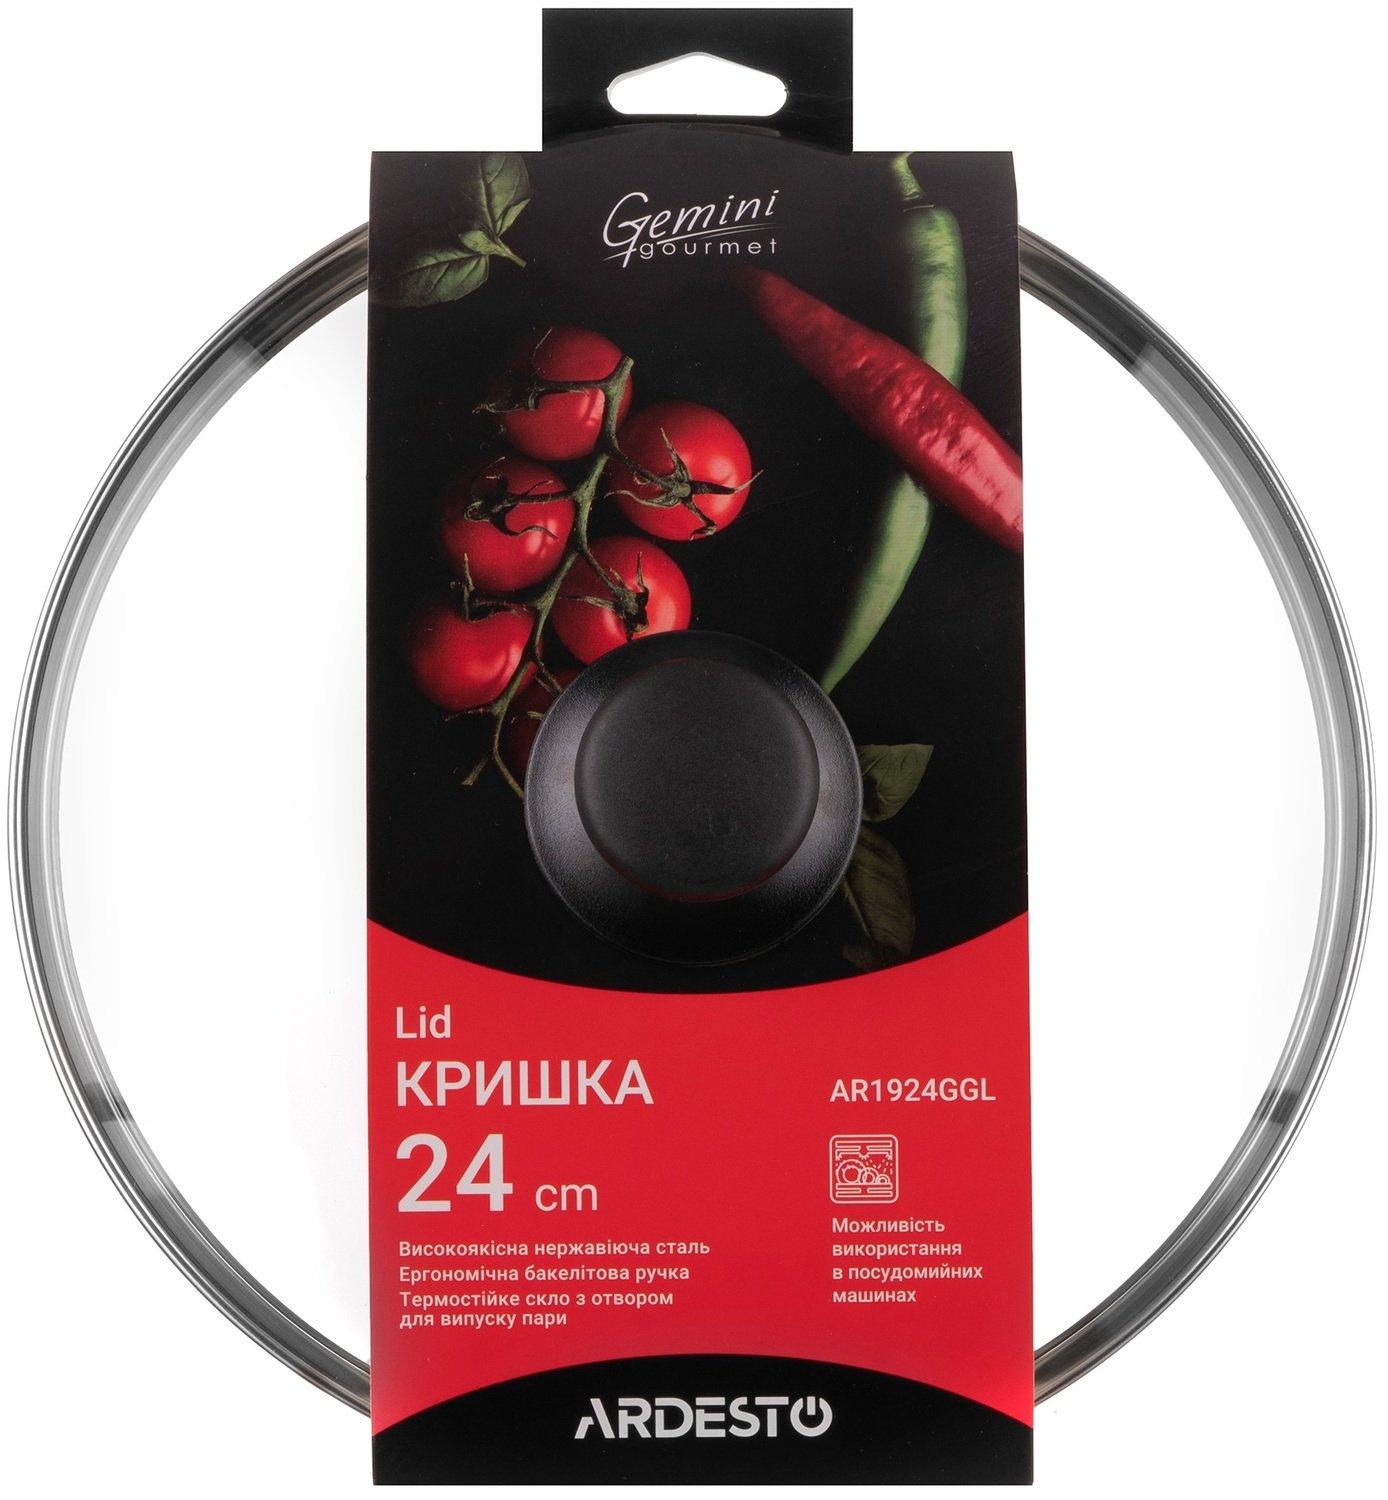 Крышка Ardesto Gemini Gourmet 24 см (AR1924GGL) фото 